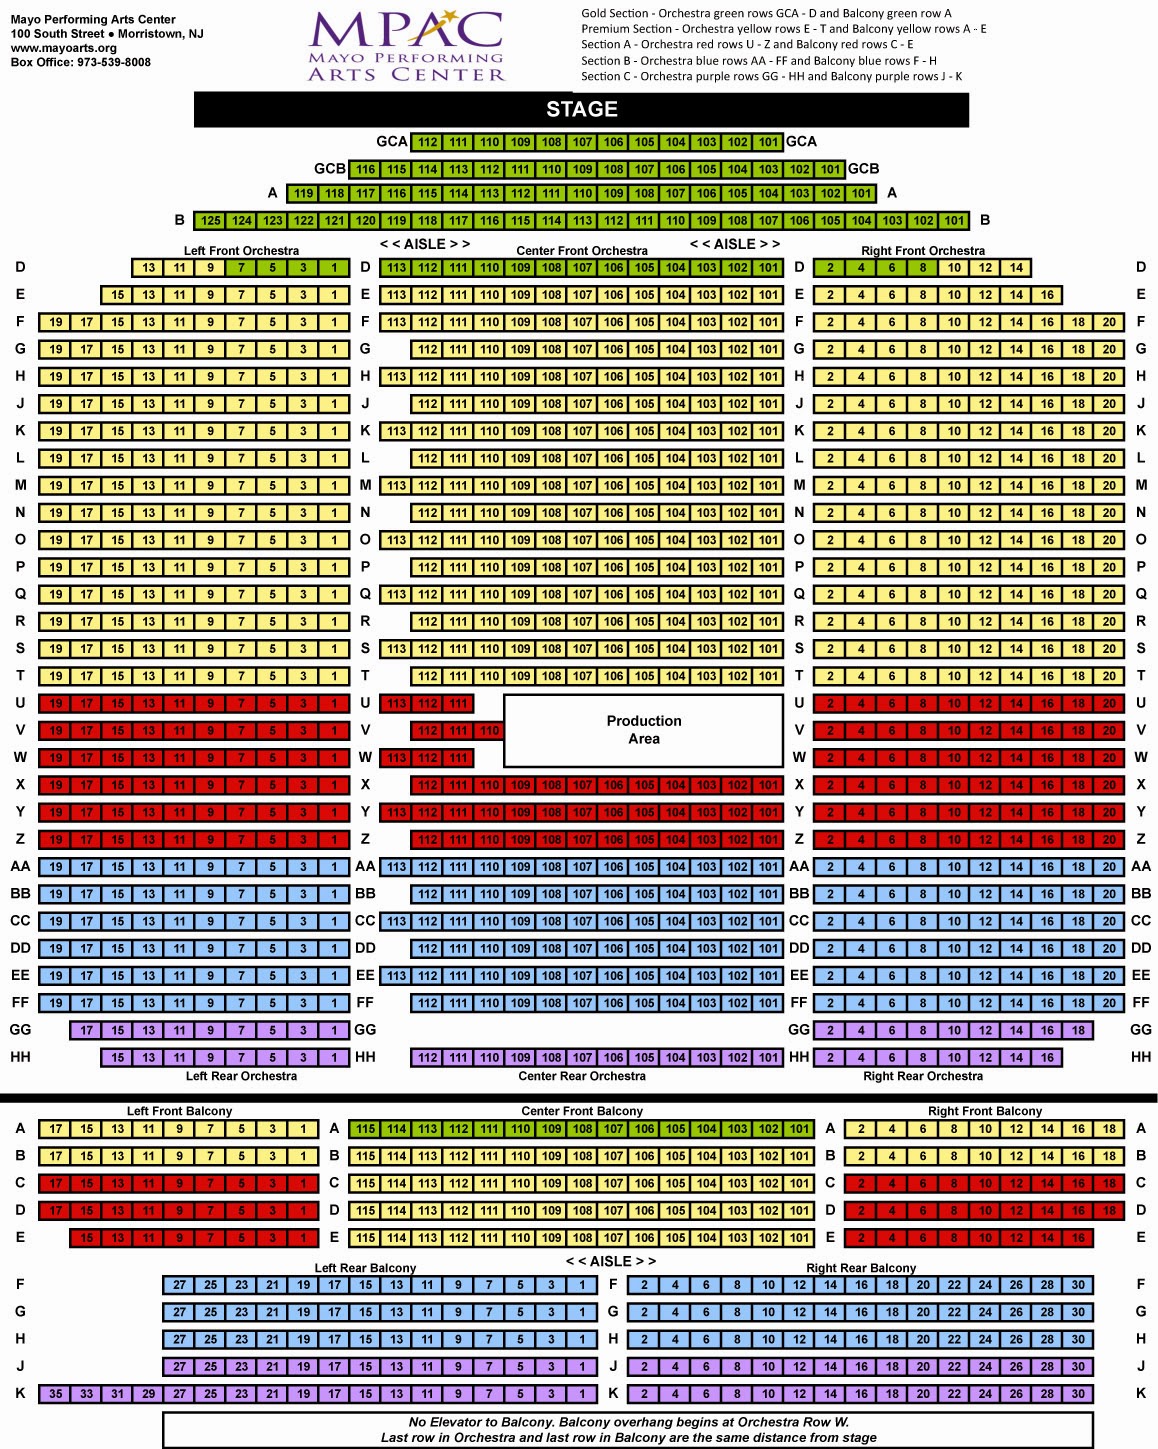 Macha Theatre Seating Chart